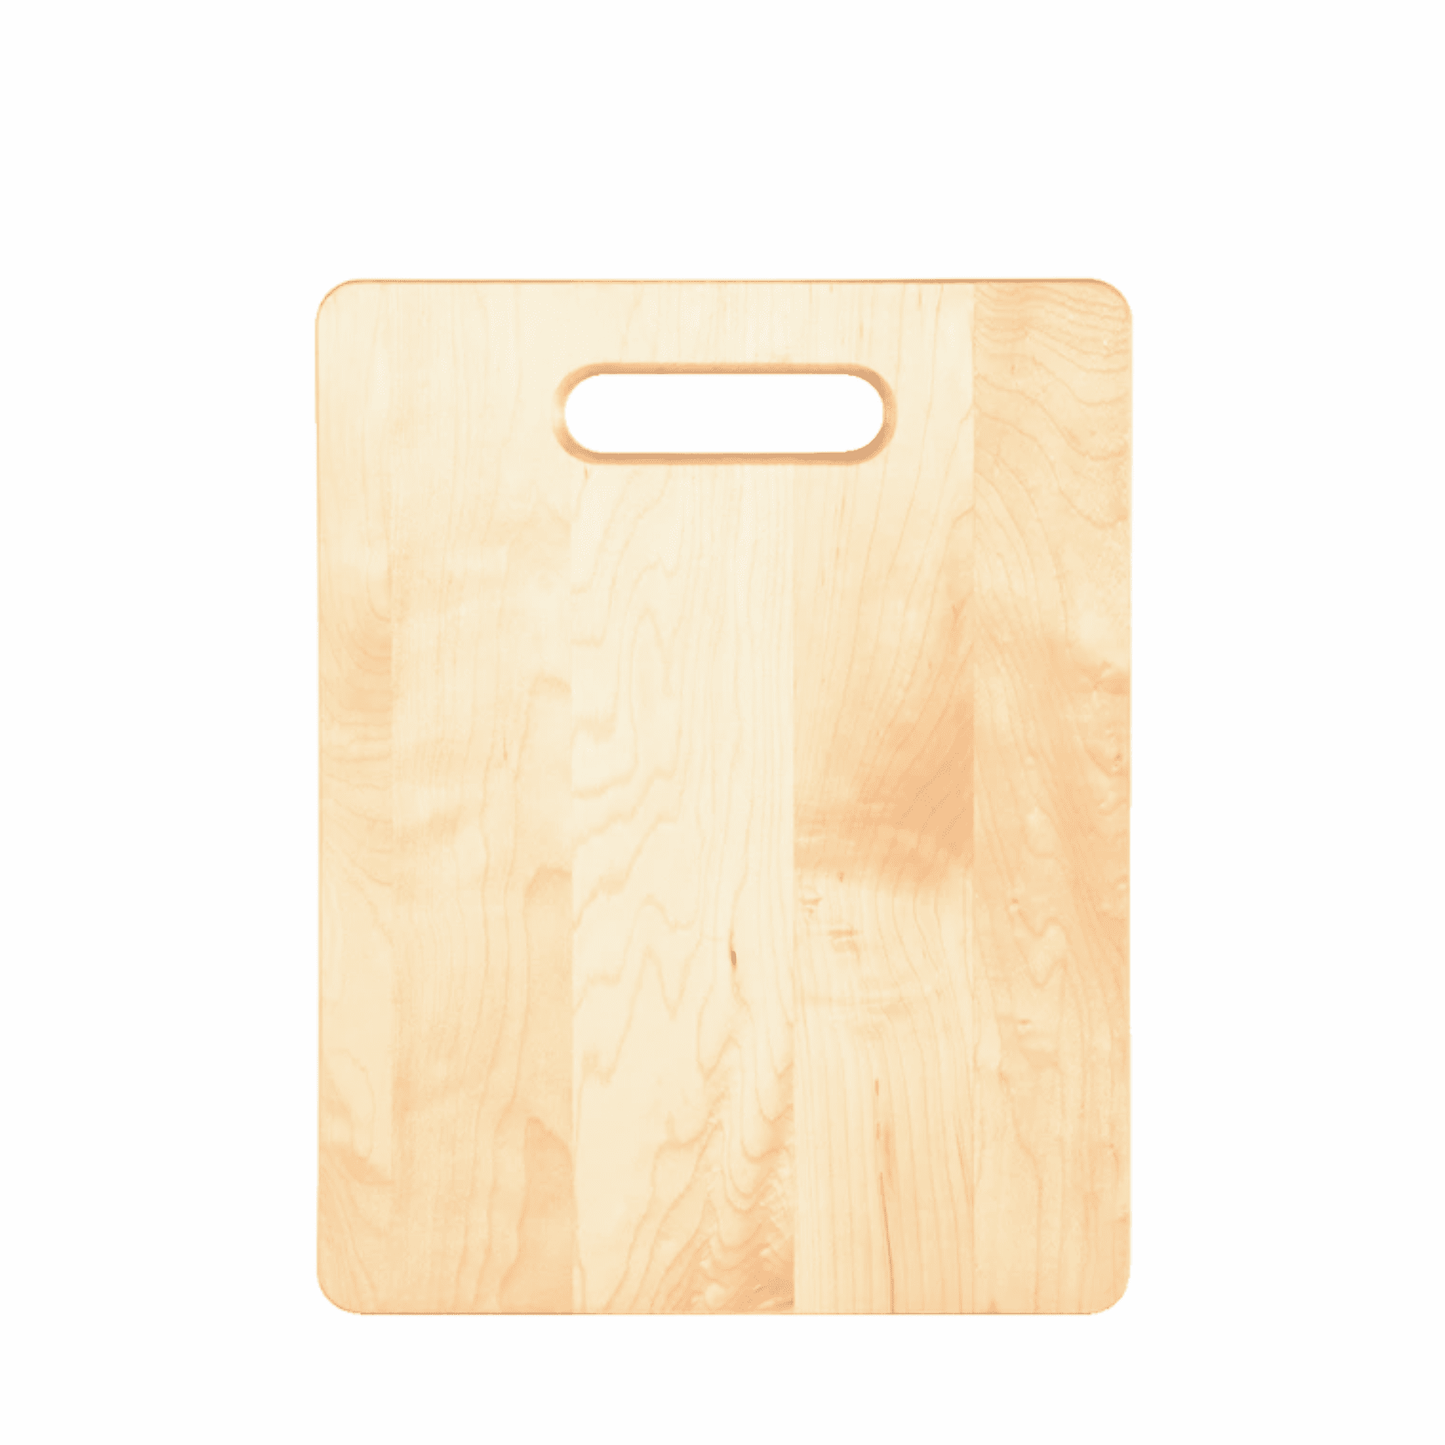 Maple Cutting Boards